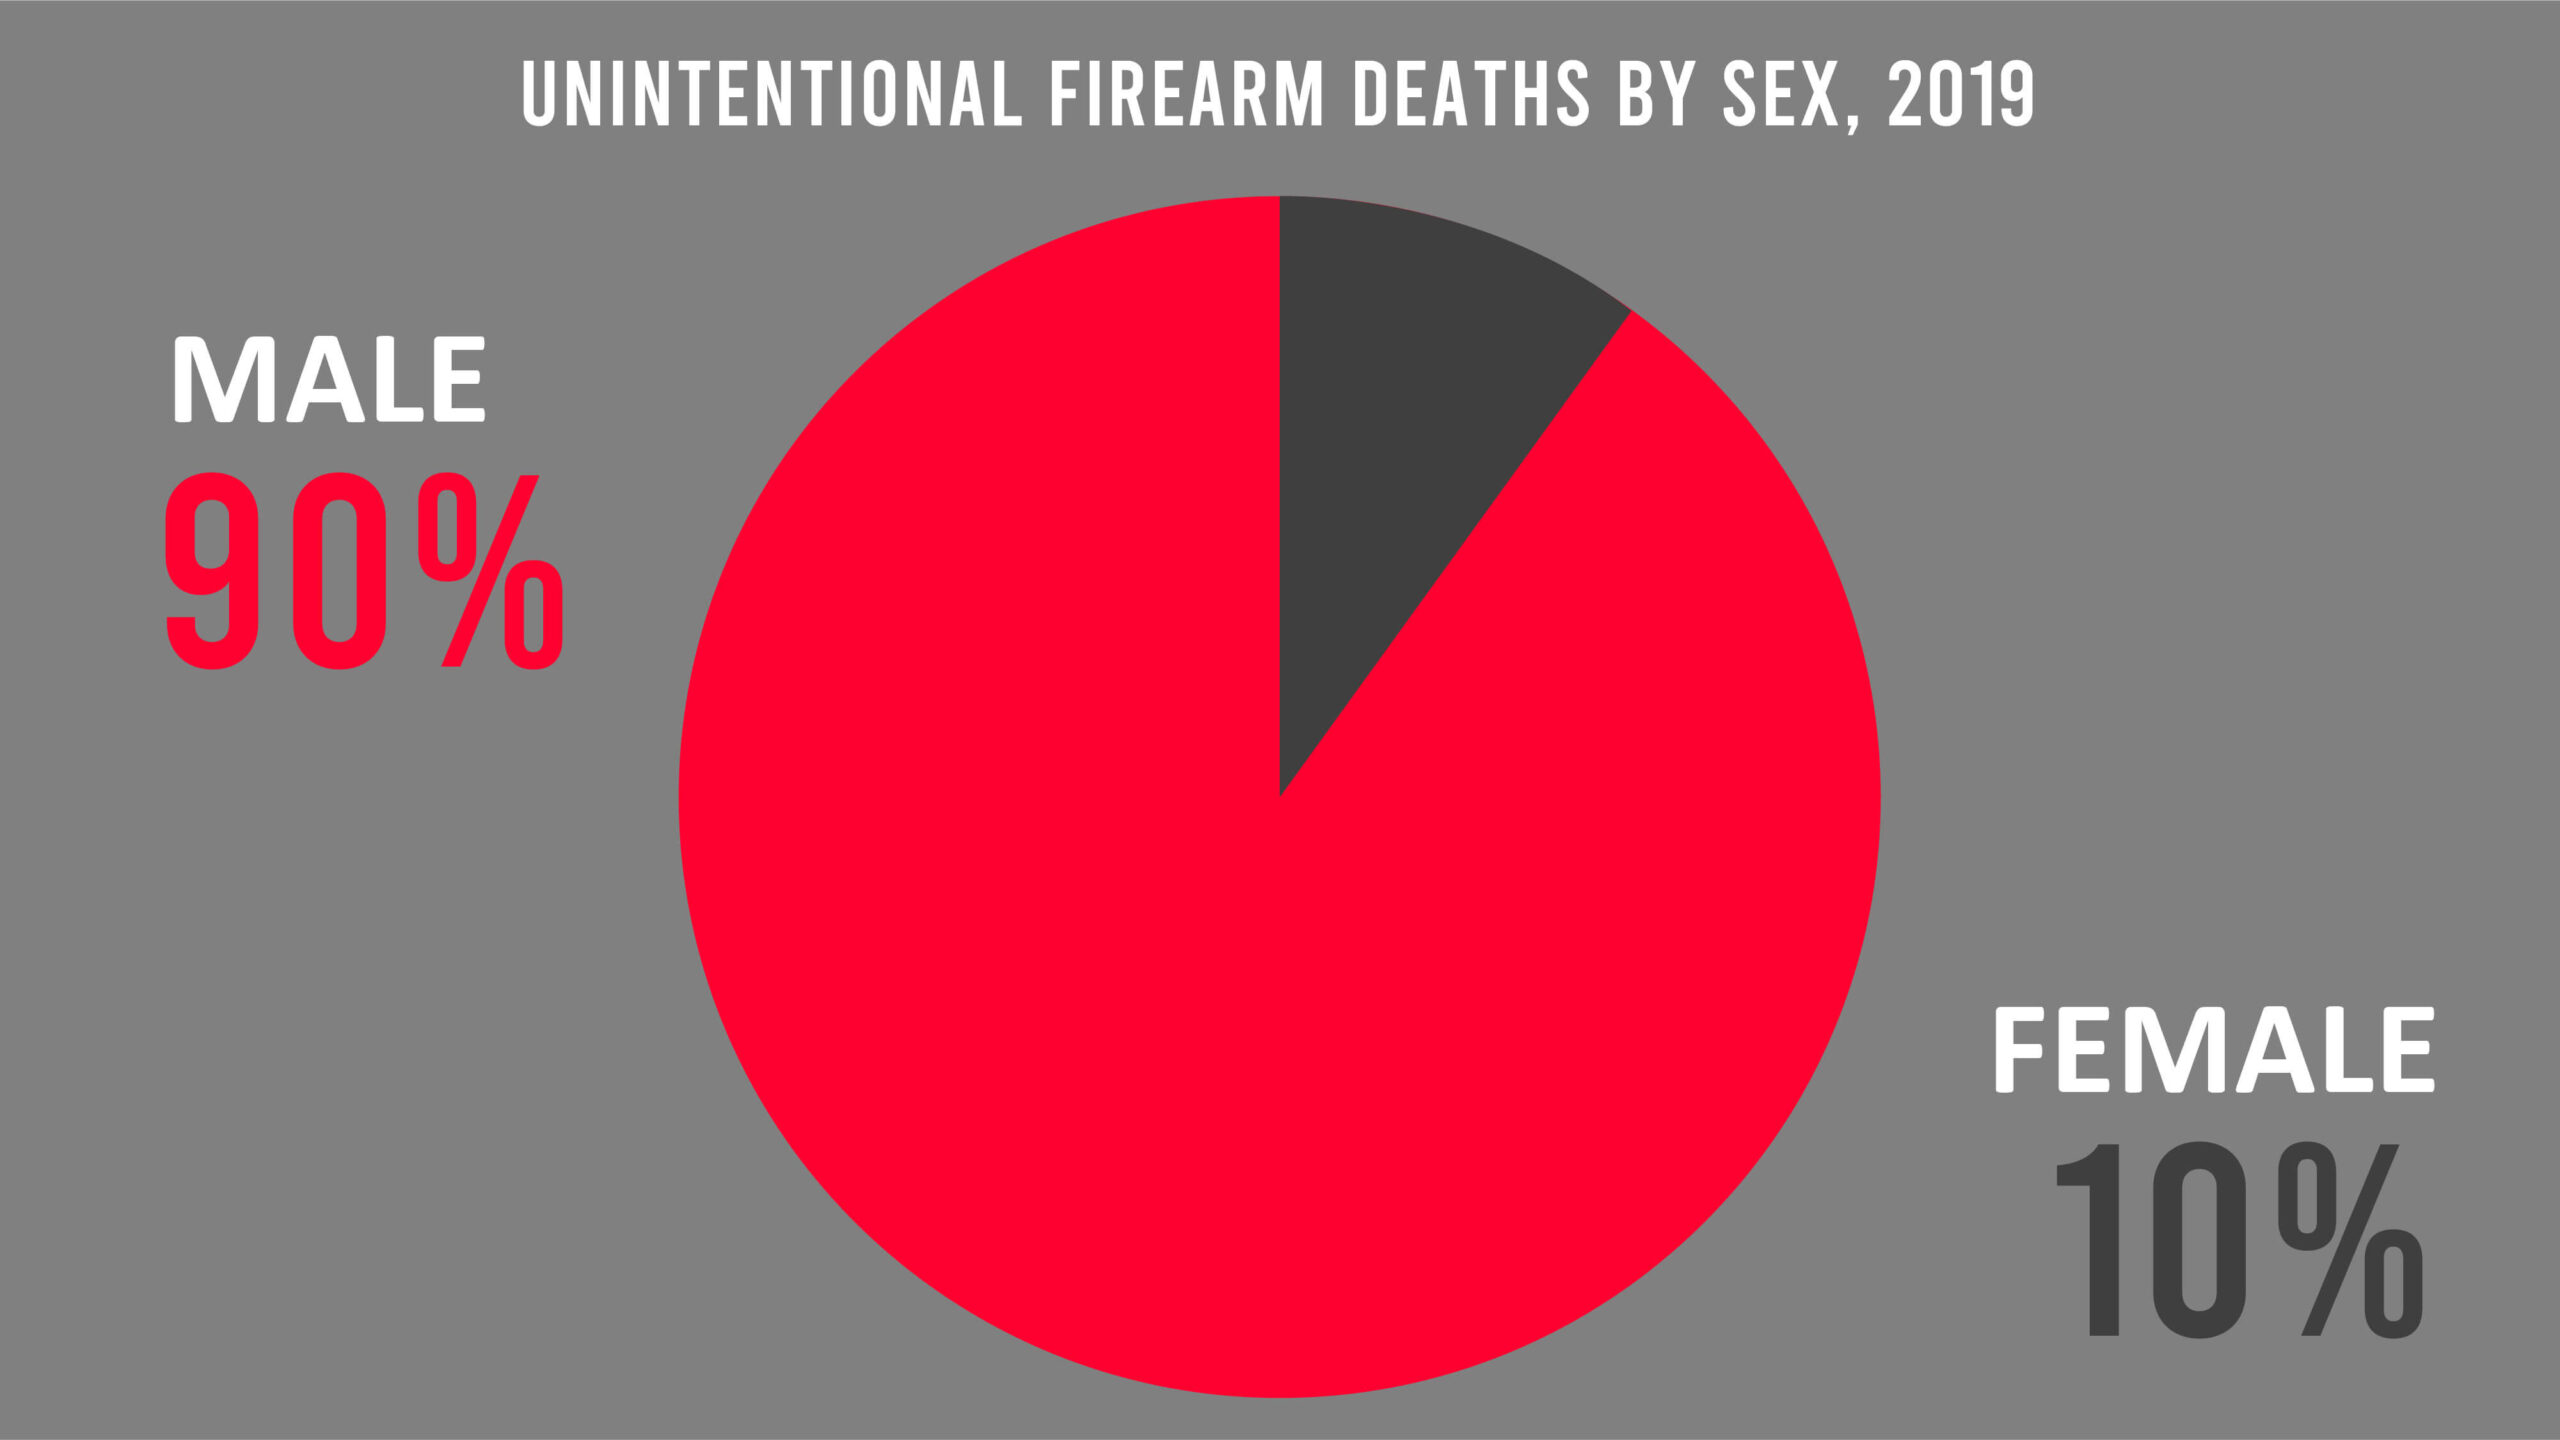 Unintentional firearm deaths by sex